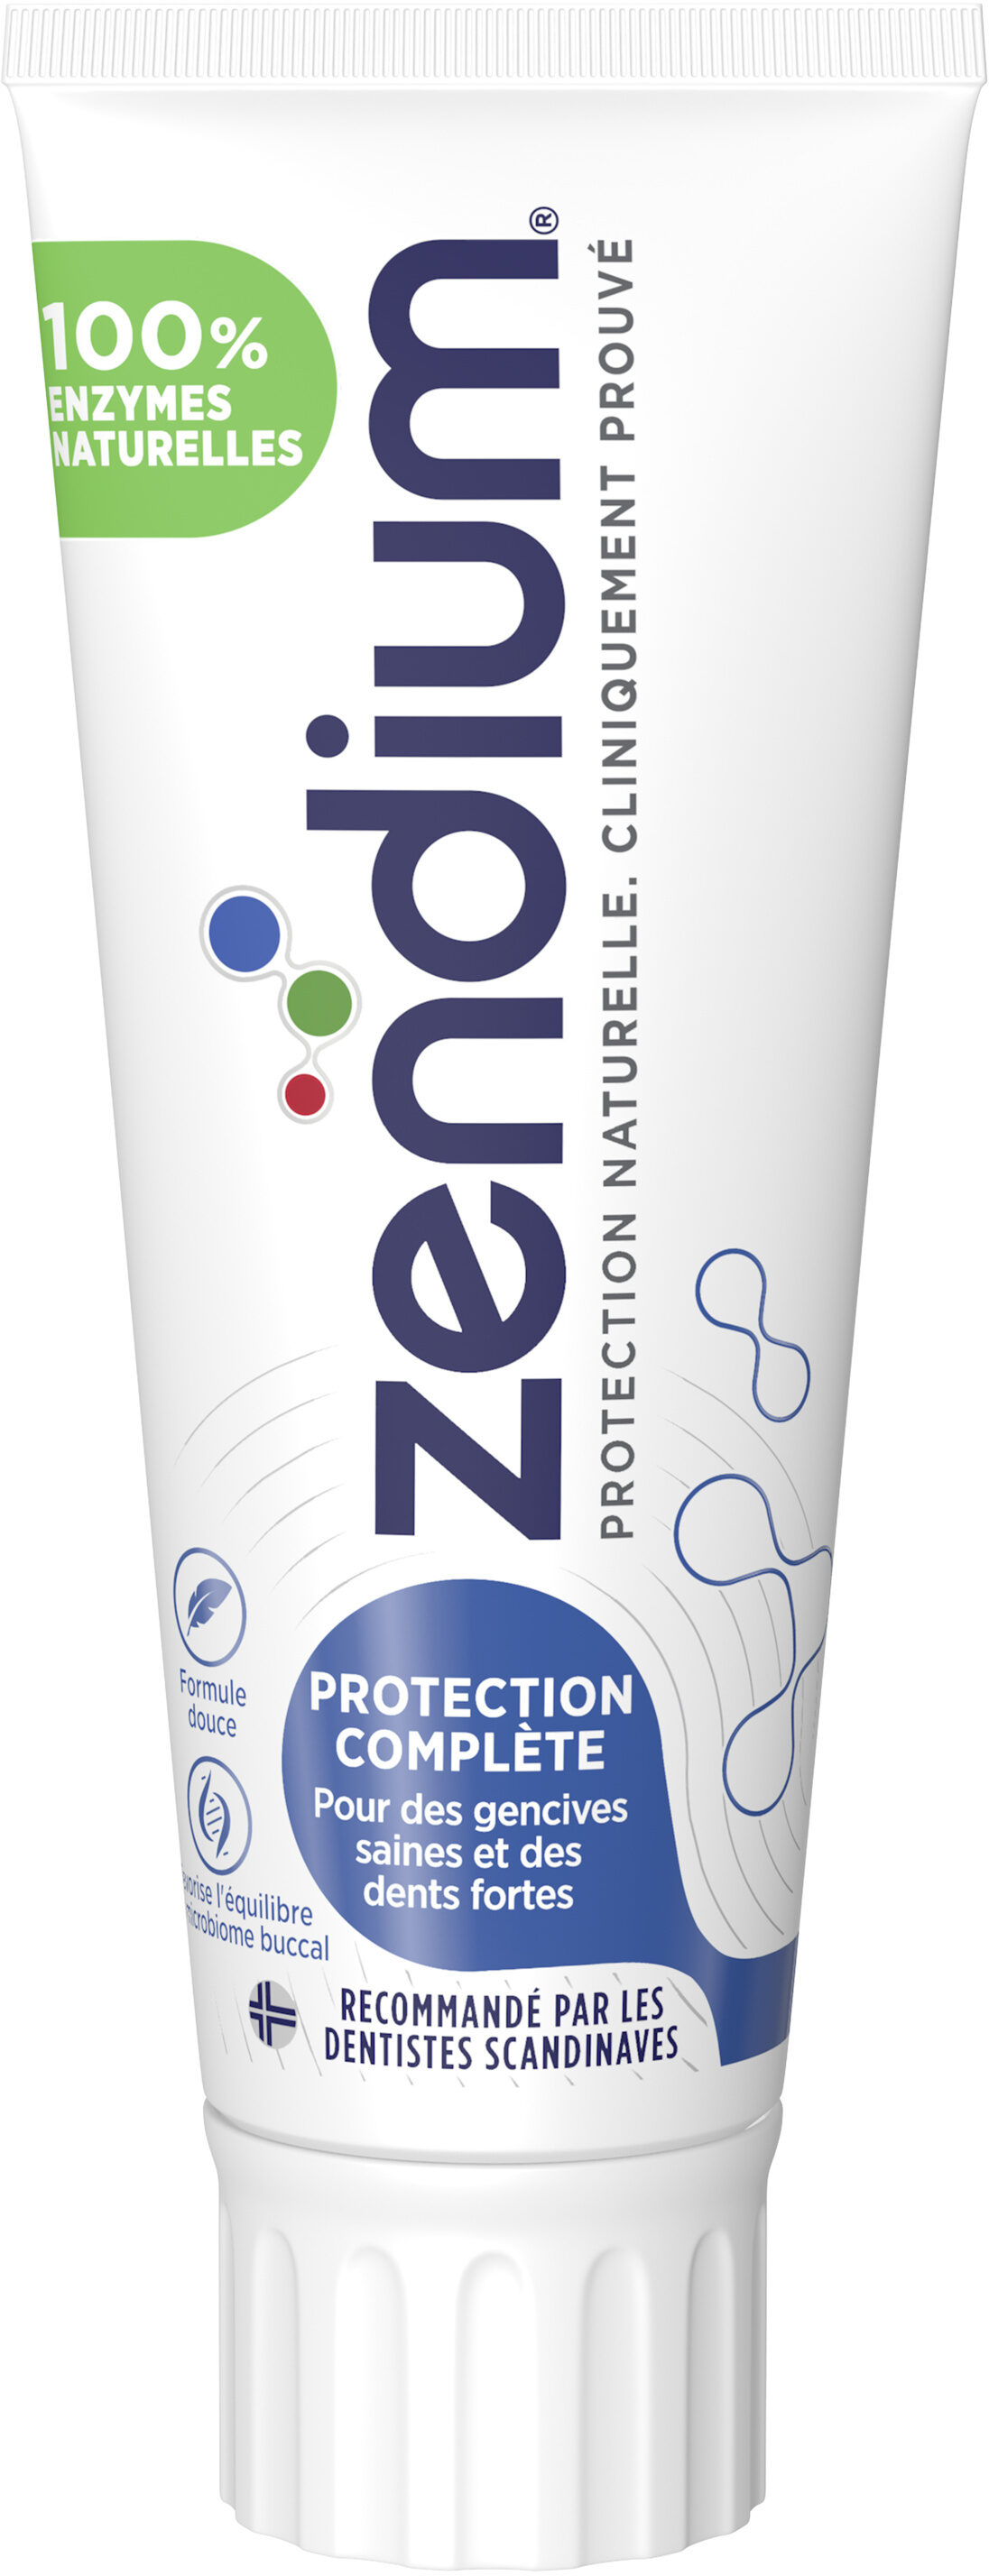 Zendium Dentifrice Protection Complète 75ml - Product - fr